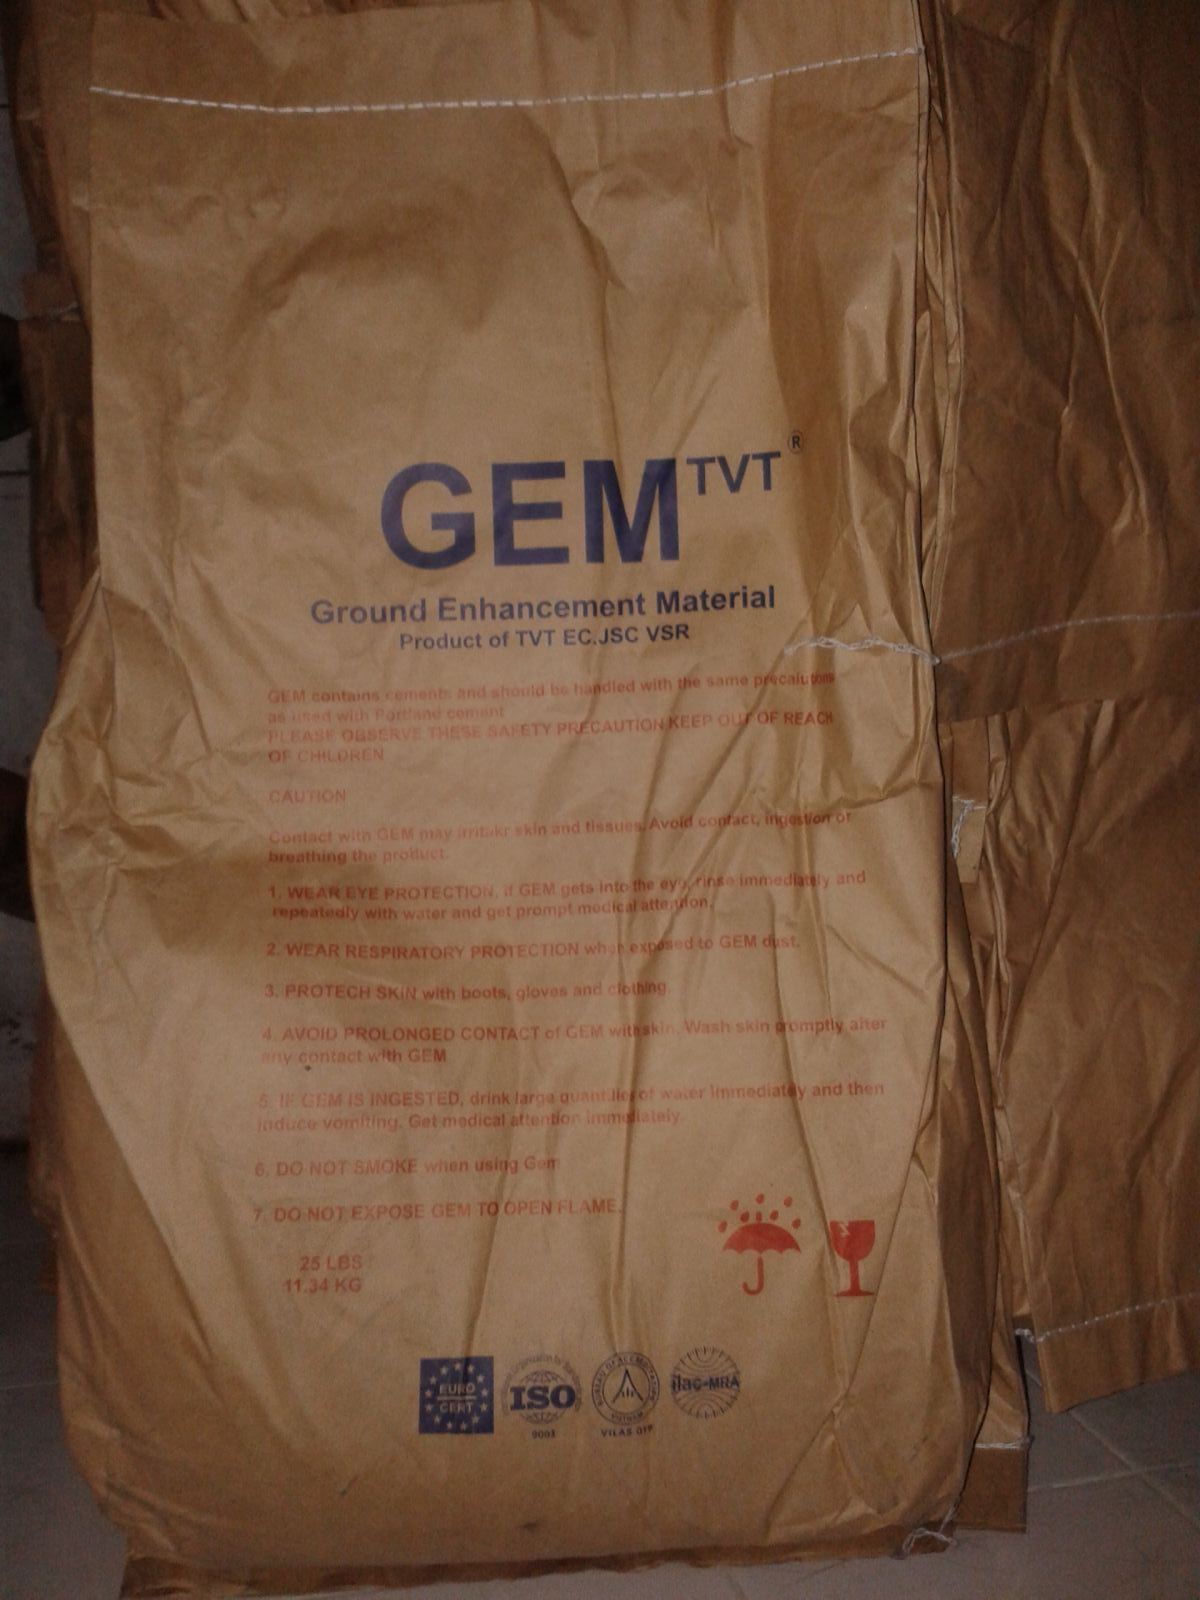 hóa chất giảm điện trở đất gem tvt 11.34kg bao bột gem tvt việt nam